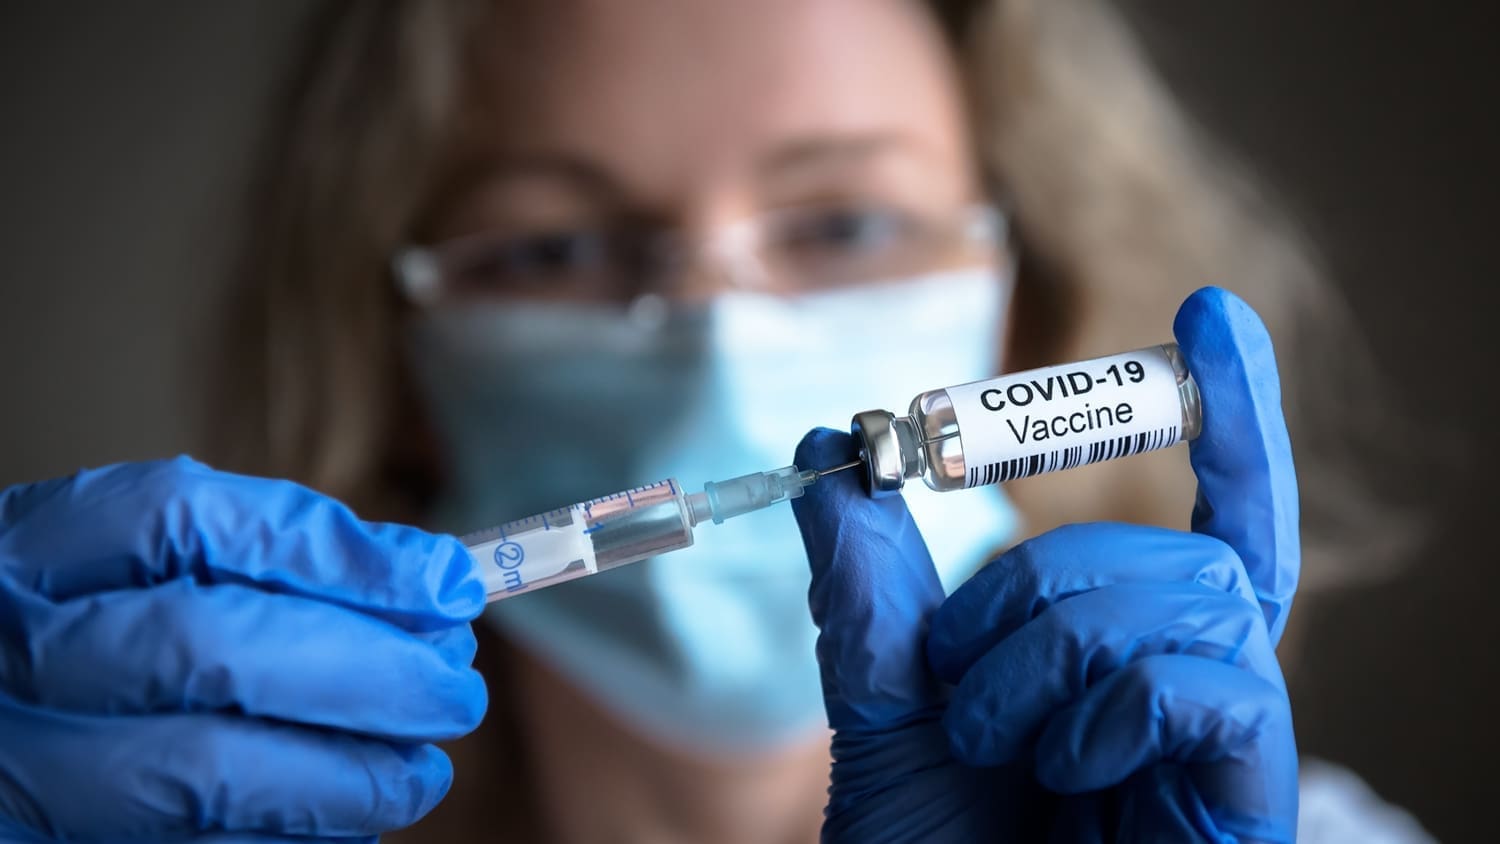 COVID-19 vaccine and fertility treatments